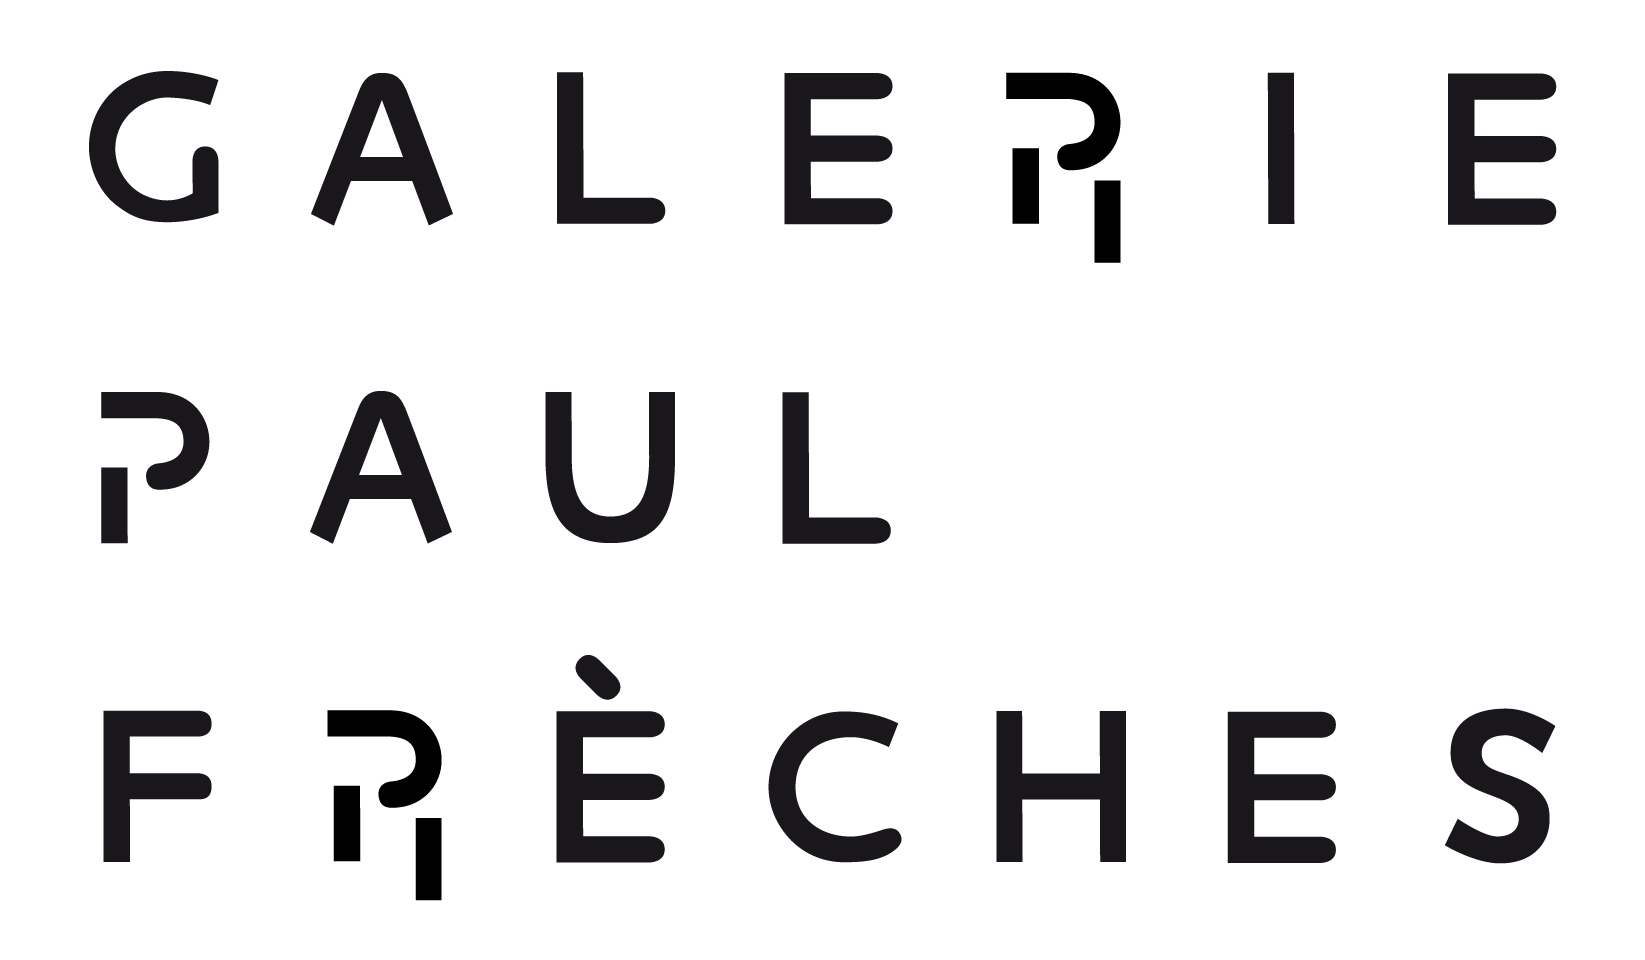 Gallerie Paul Freches, 2012